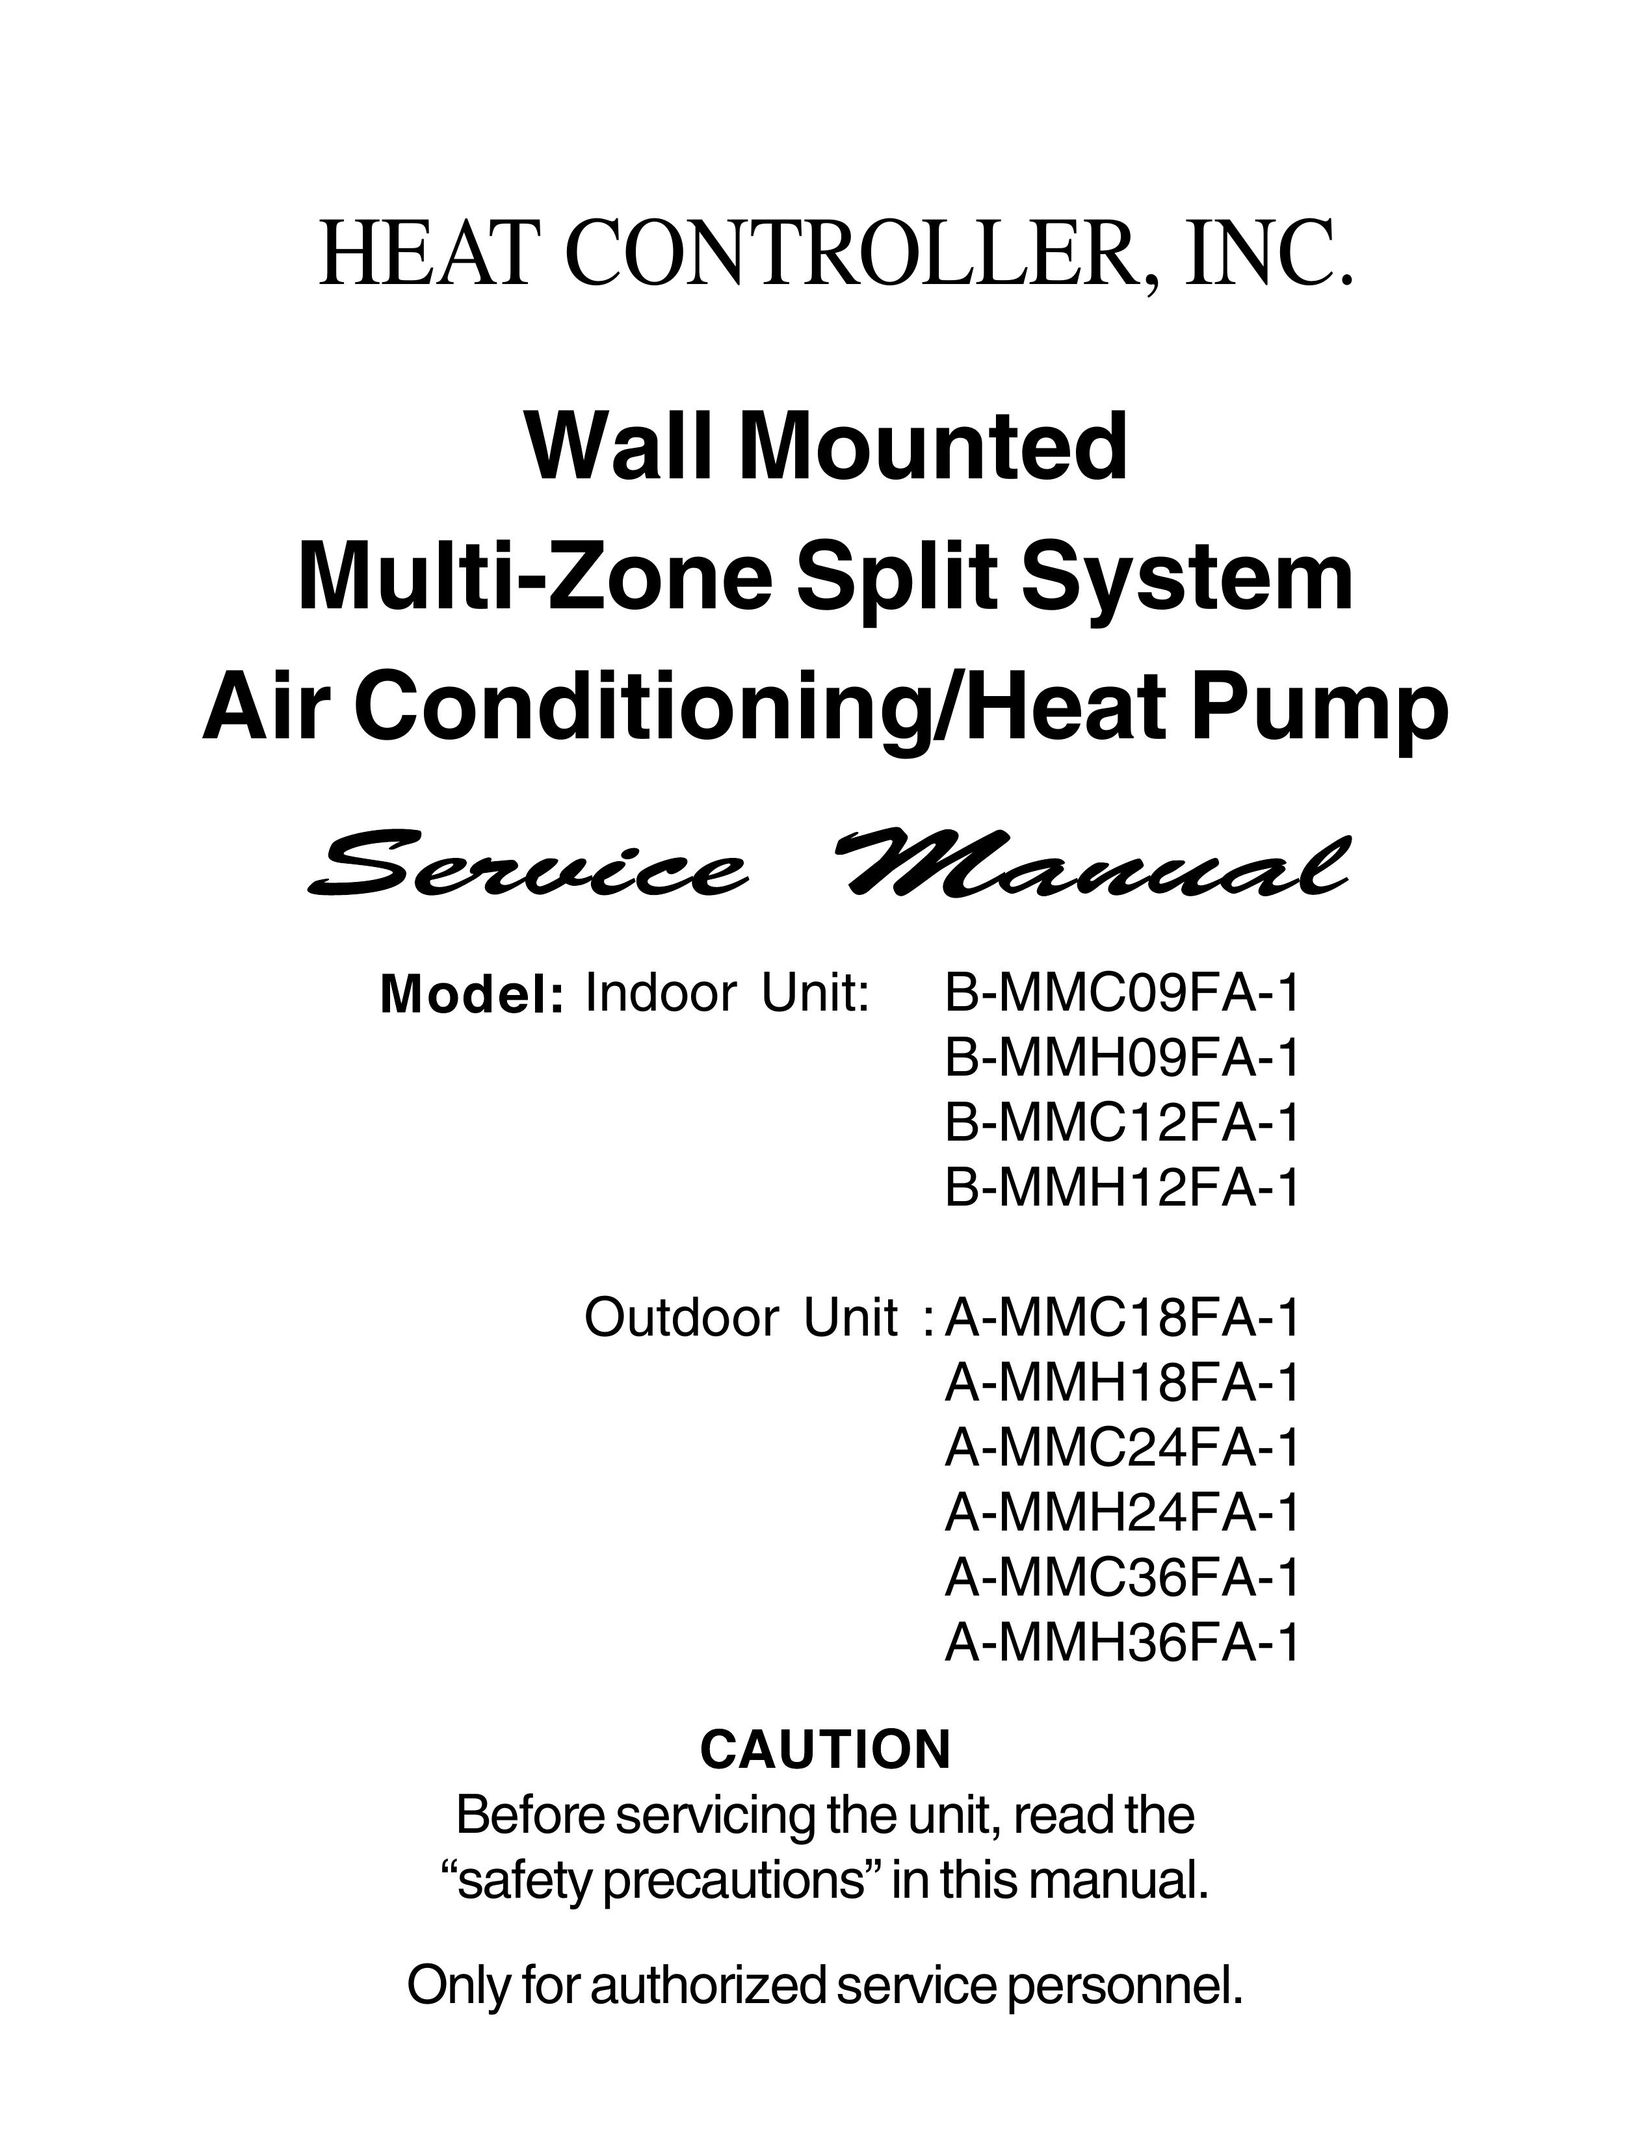 Heat Controller B-MMH12FA-1 Air Conditioner User Manual